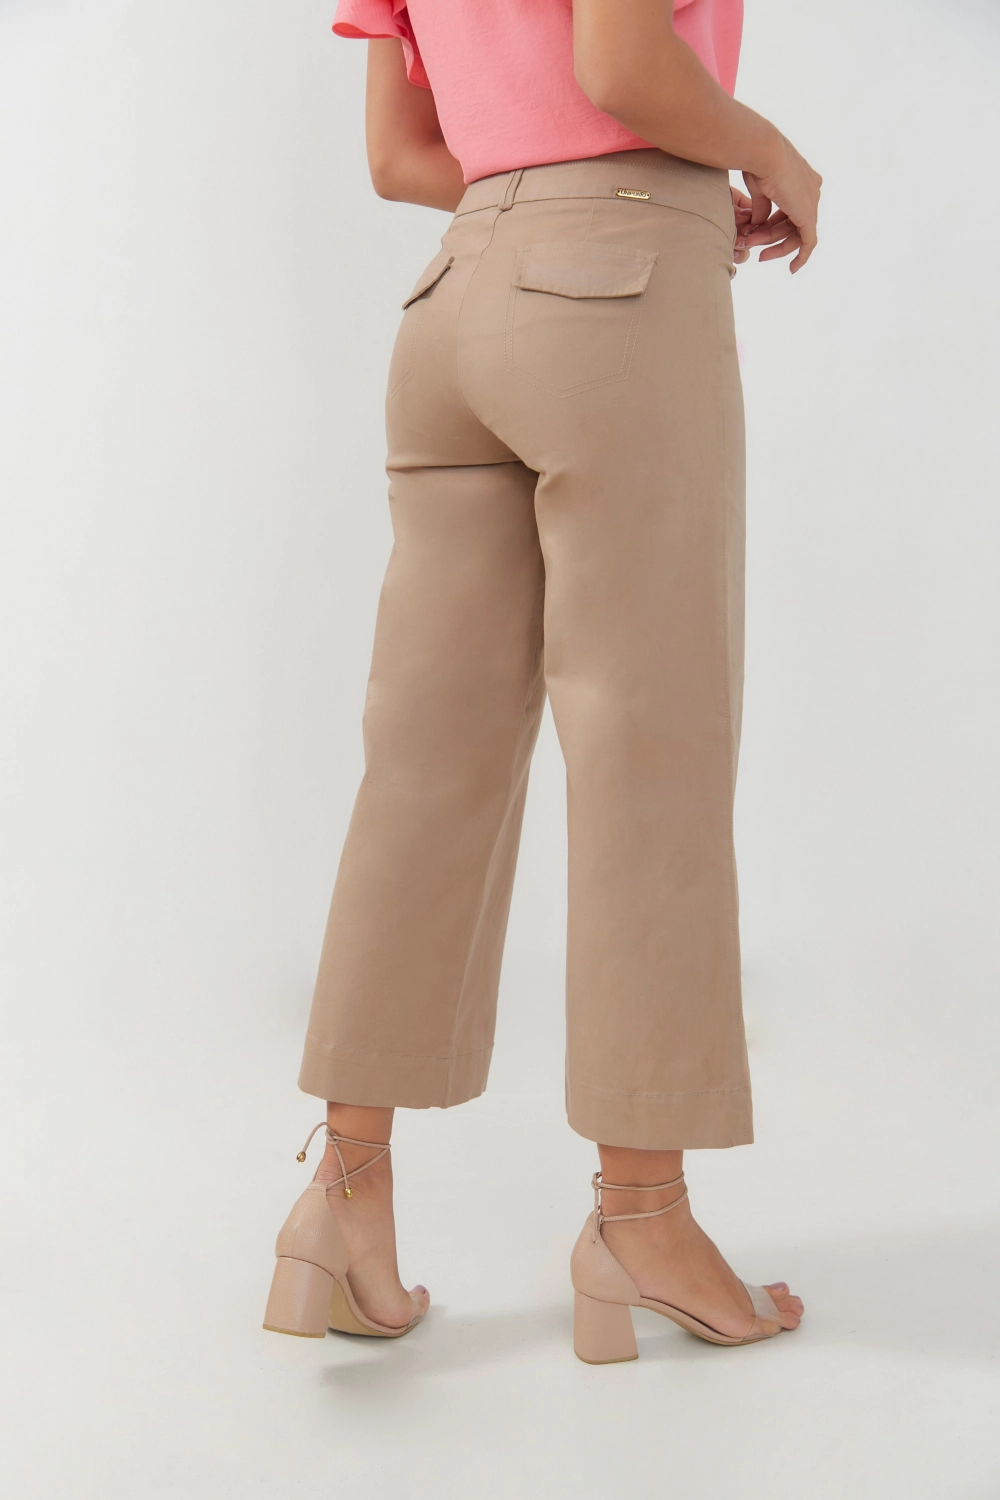 Pantalón cropped en dril pretina ancha. Kaki talla 10